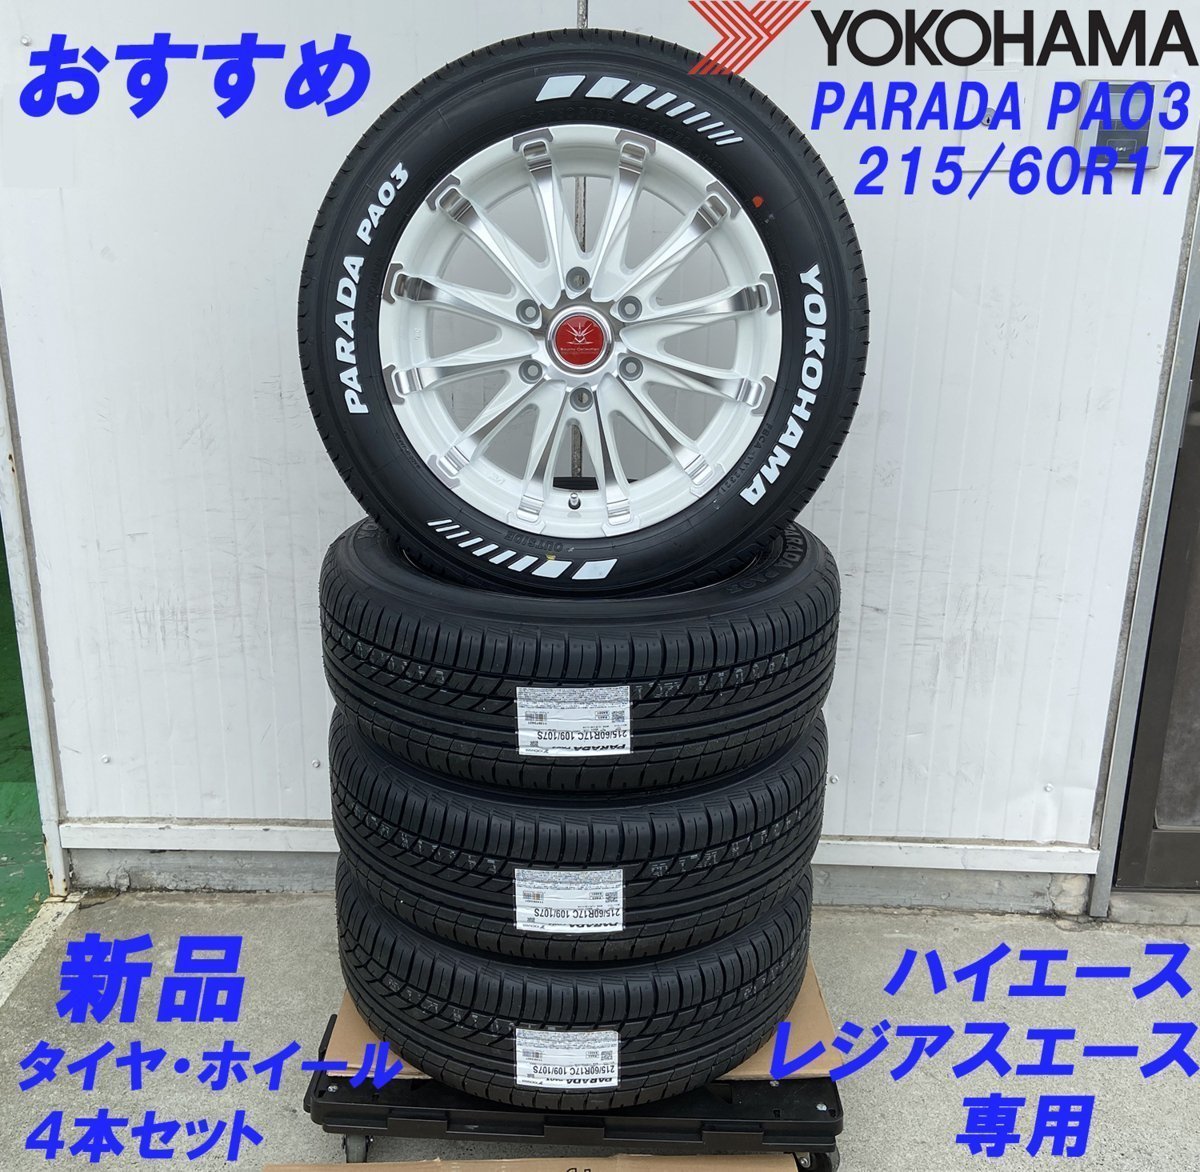  vehicle inspection correspondence 200 series Hiace Regius Ace 17 -inch tire wheel BD12 white polish YOKOHAMA PARADA white letter 215/60R17